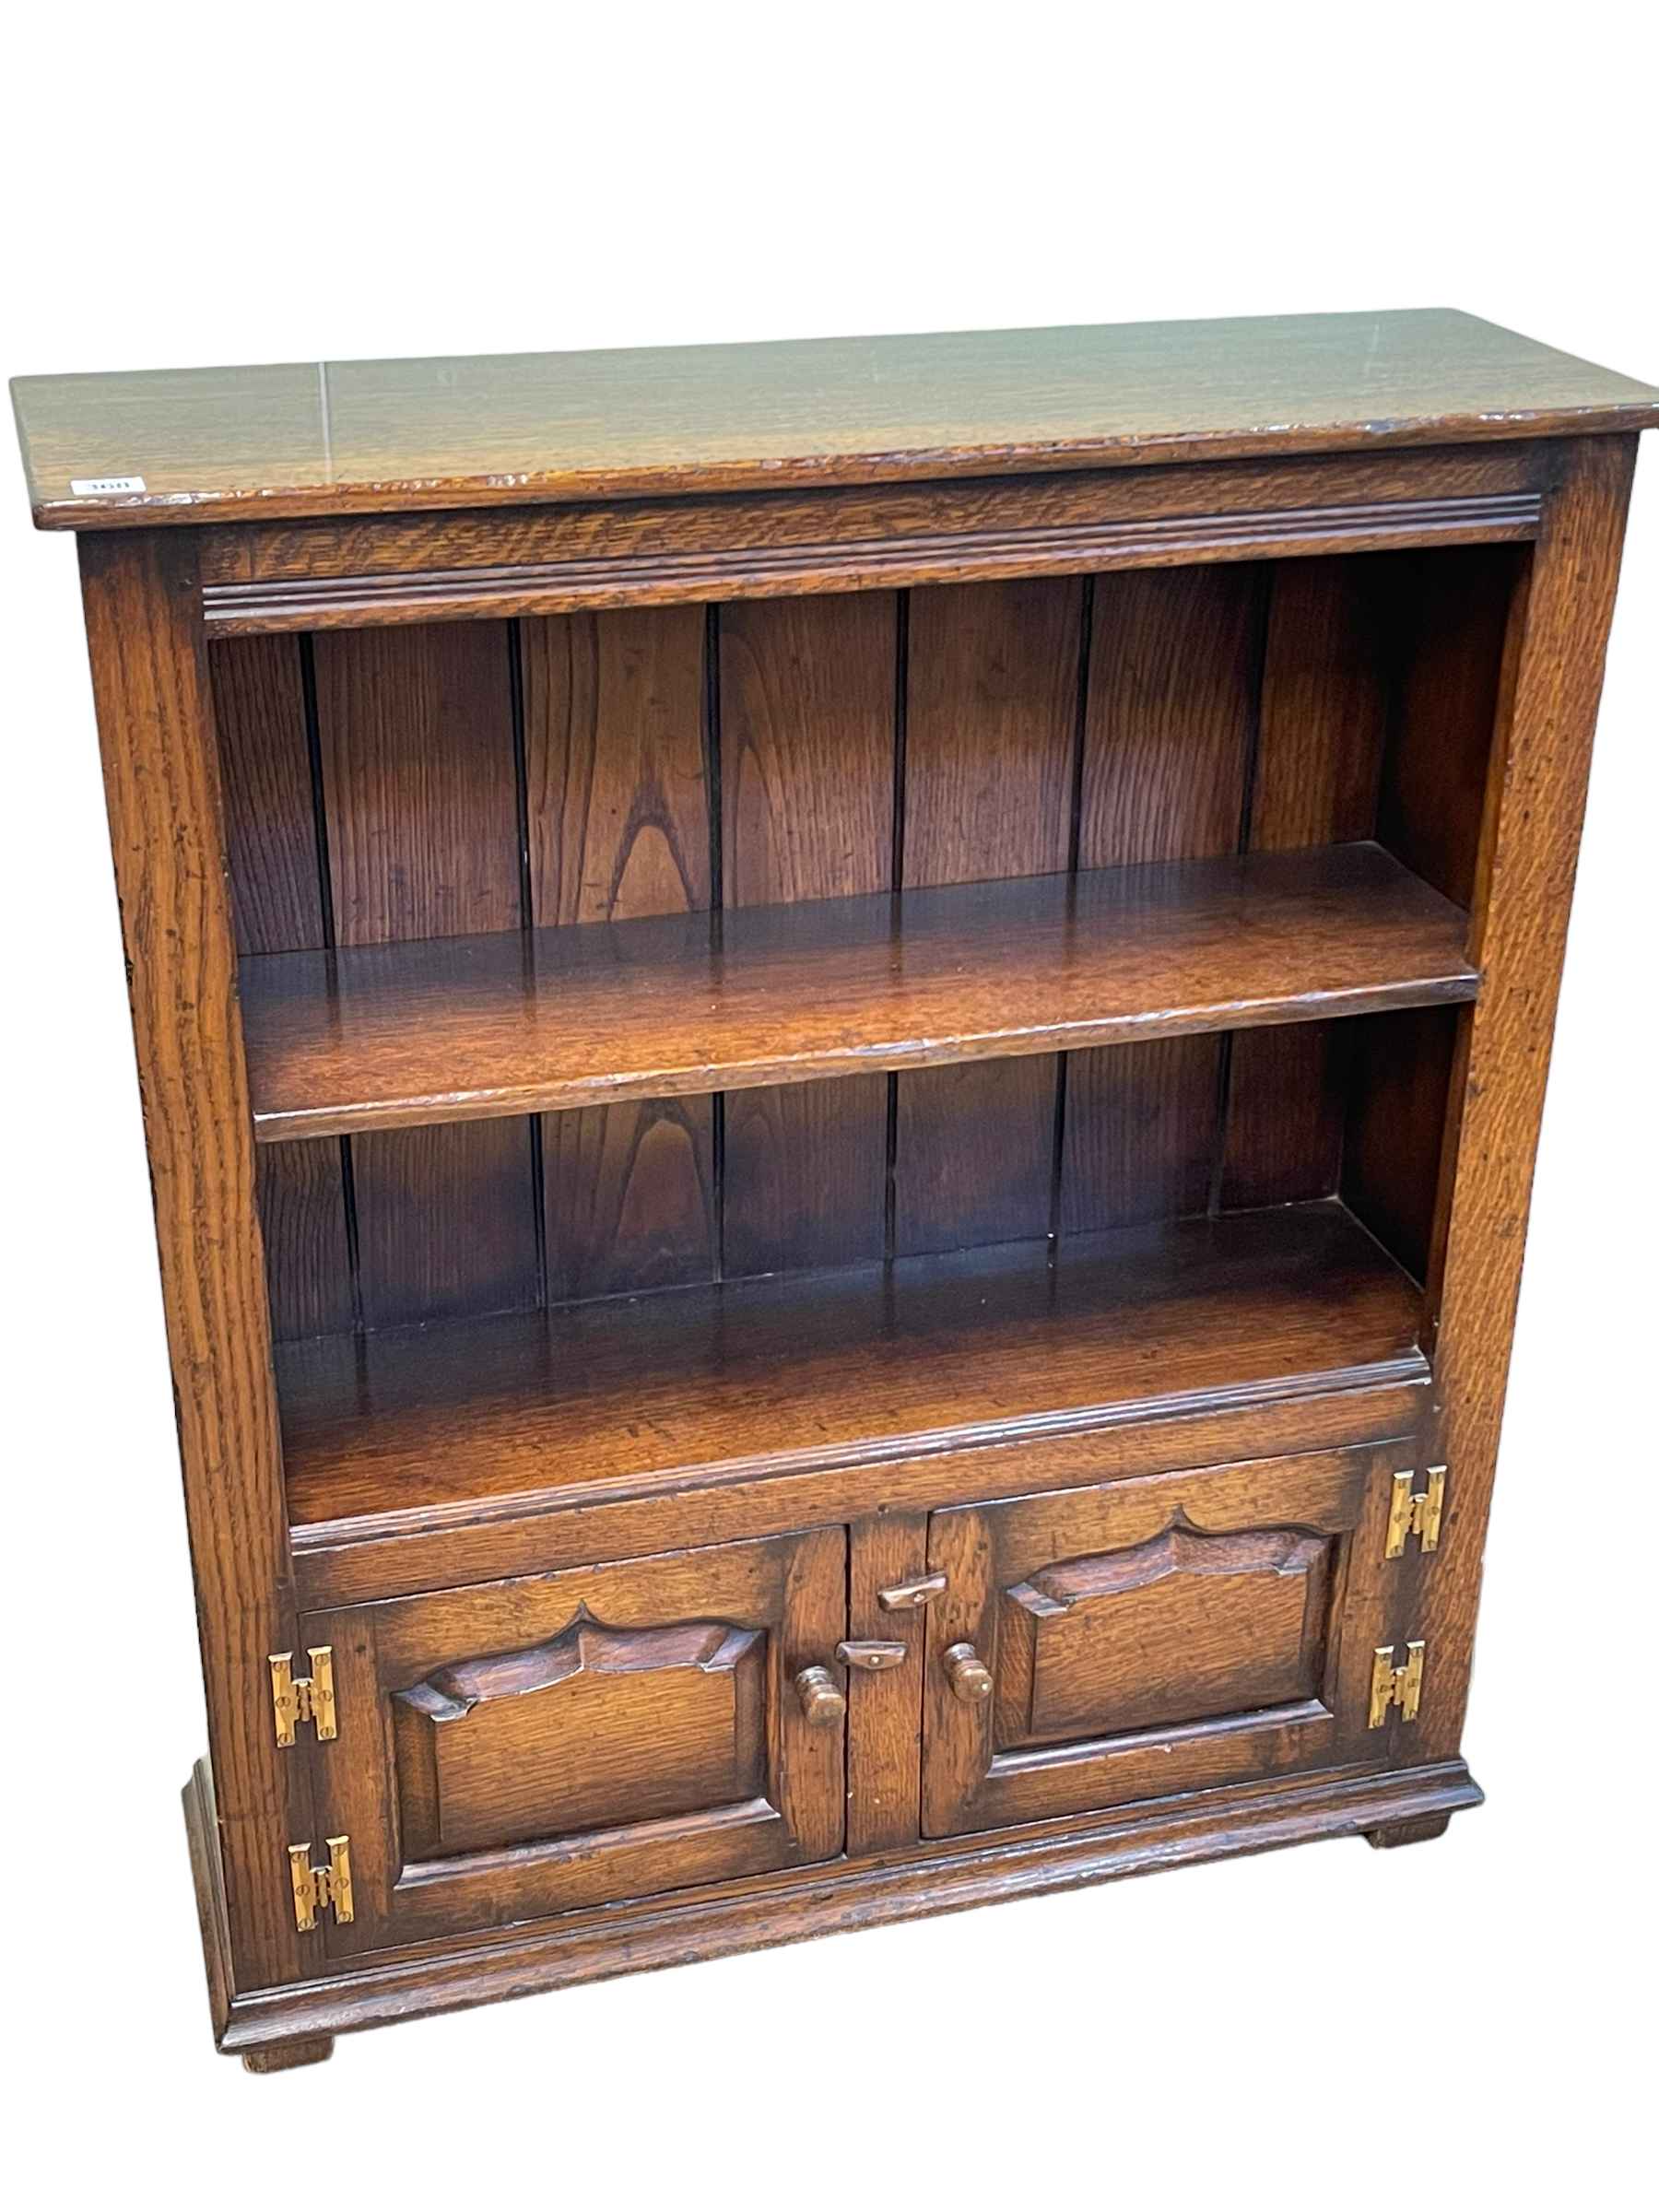 Titchmarsh & Goodwin oak cabinet bookcase having open top above two fielded panel doors,